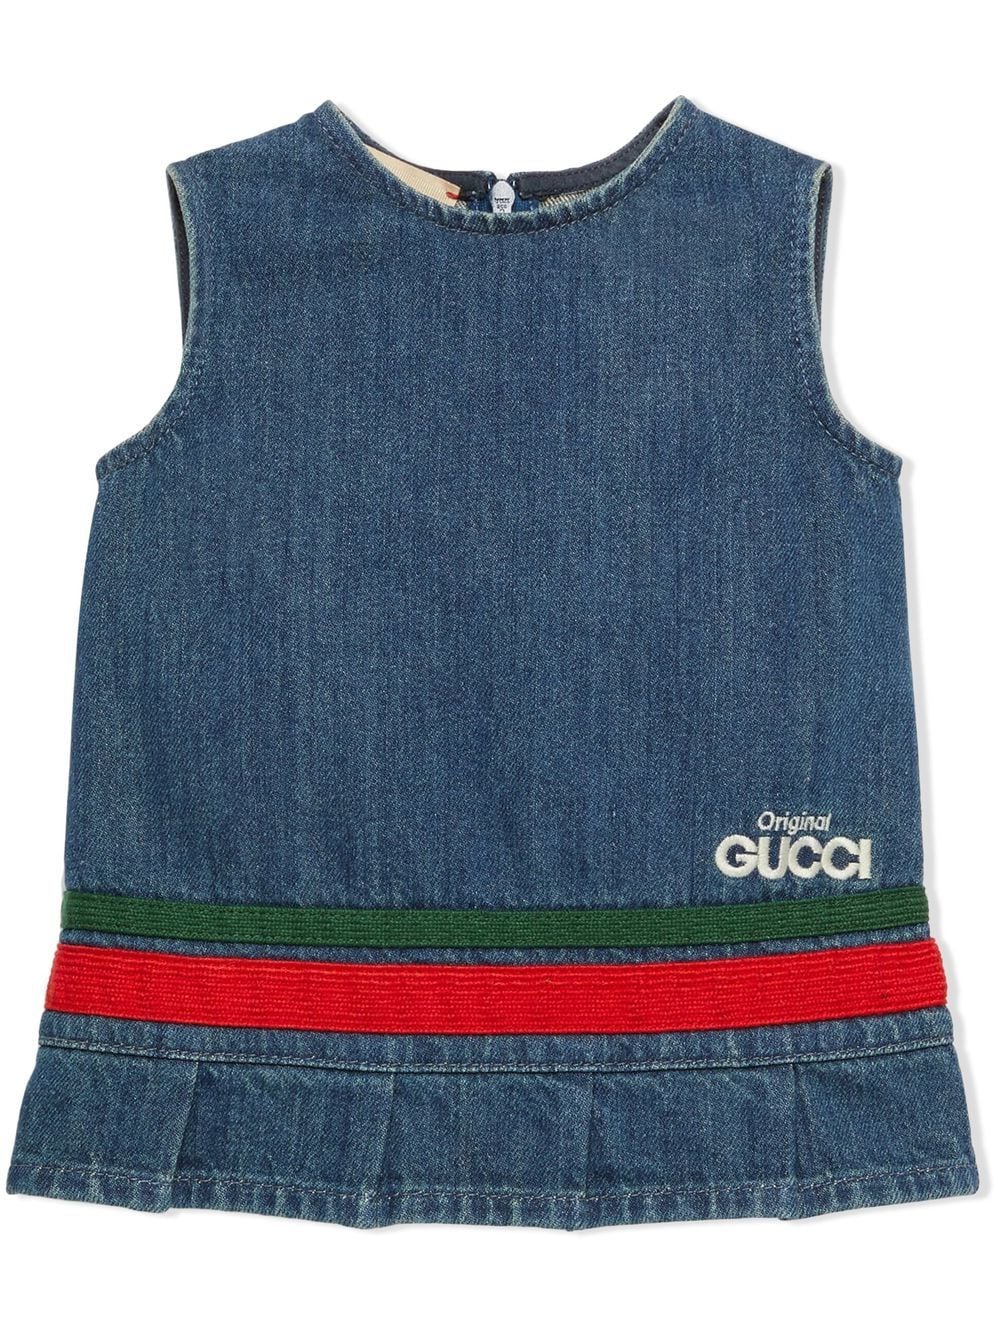 Gucci Kids Original Gucci sleeveless dress - Blue von Gucci Kids